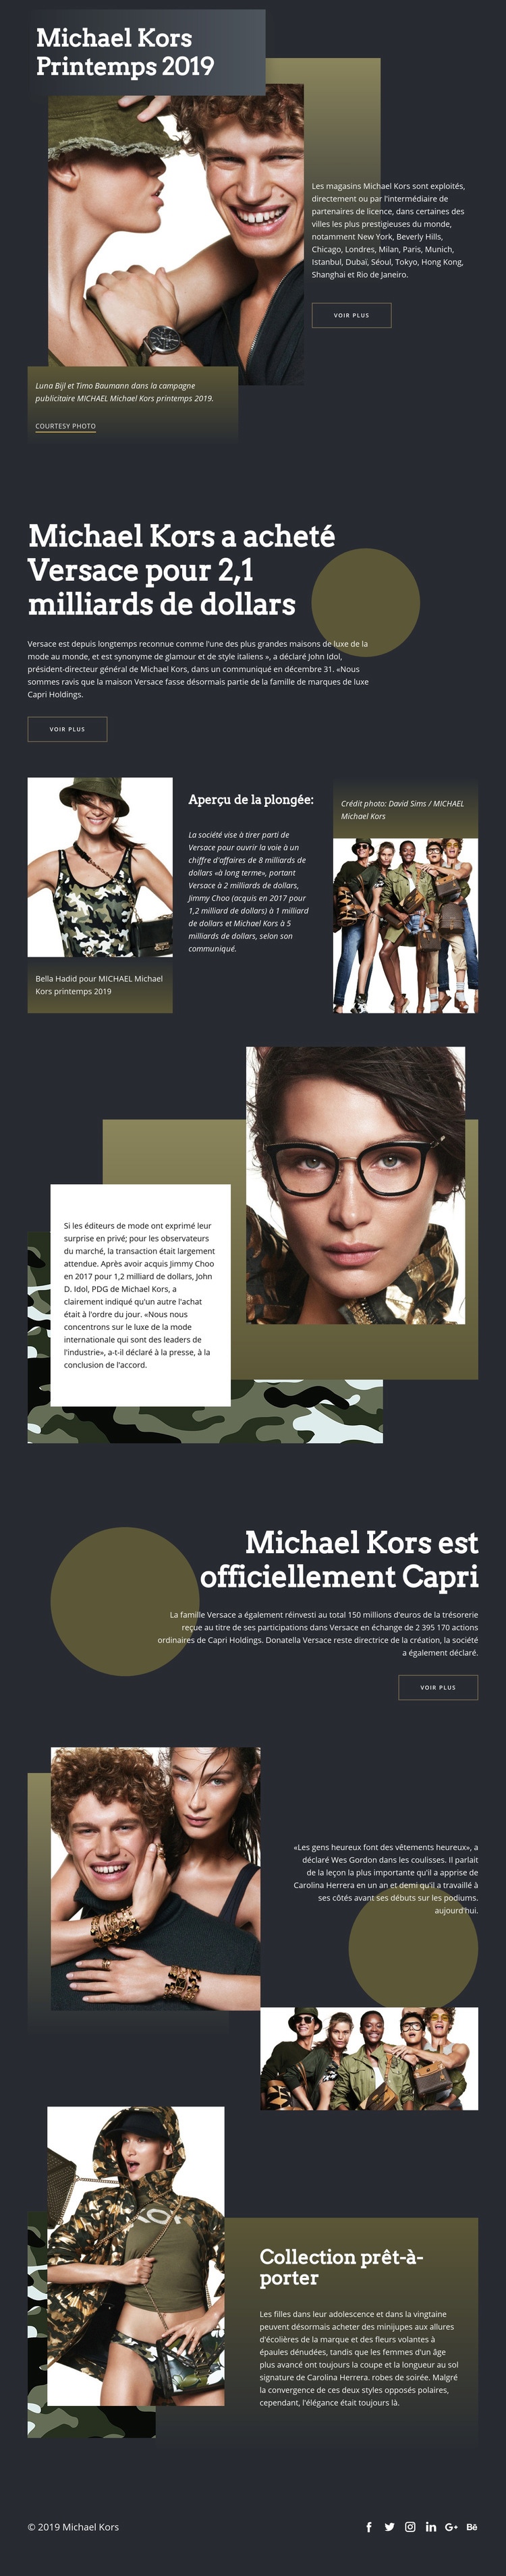 Michael Kors Dark Maquette de site Web